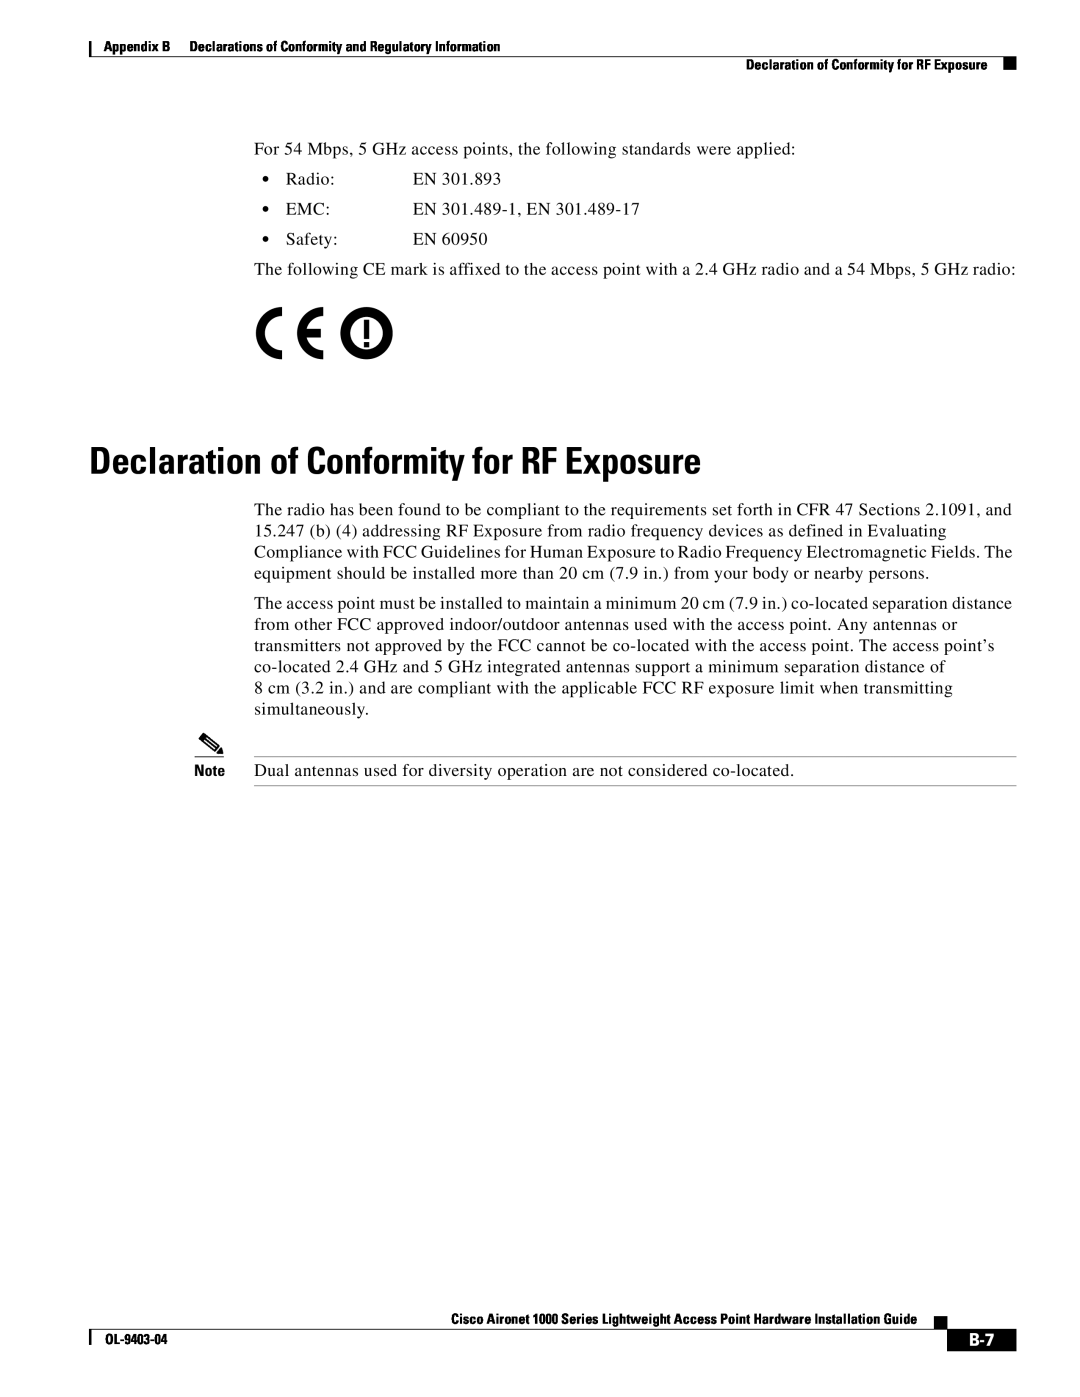 Cisco Systems 2000 appendix Declaration of Conformity for RF Exposure 